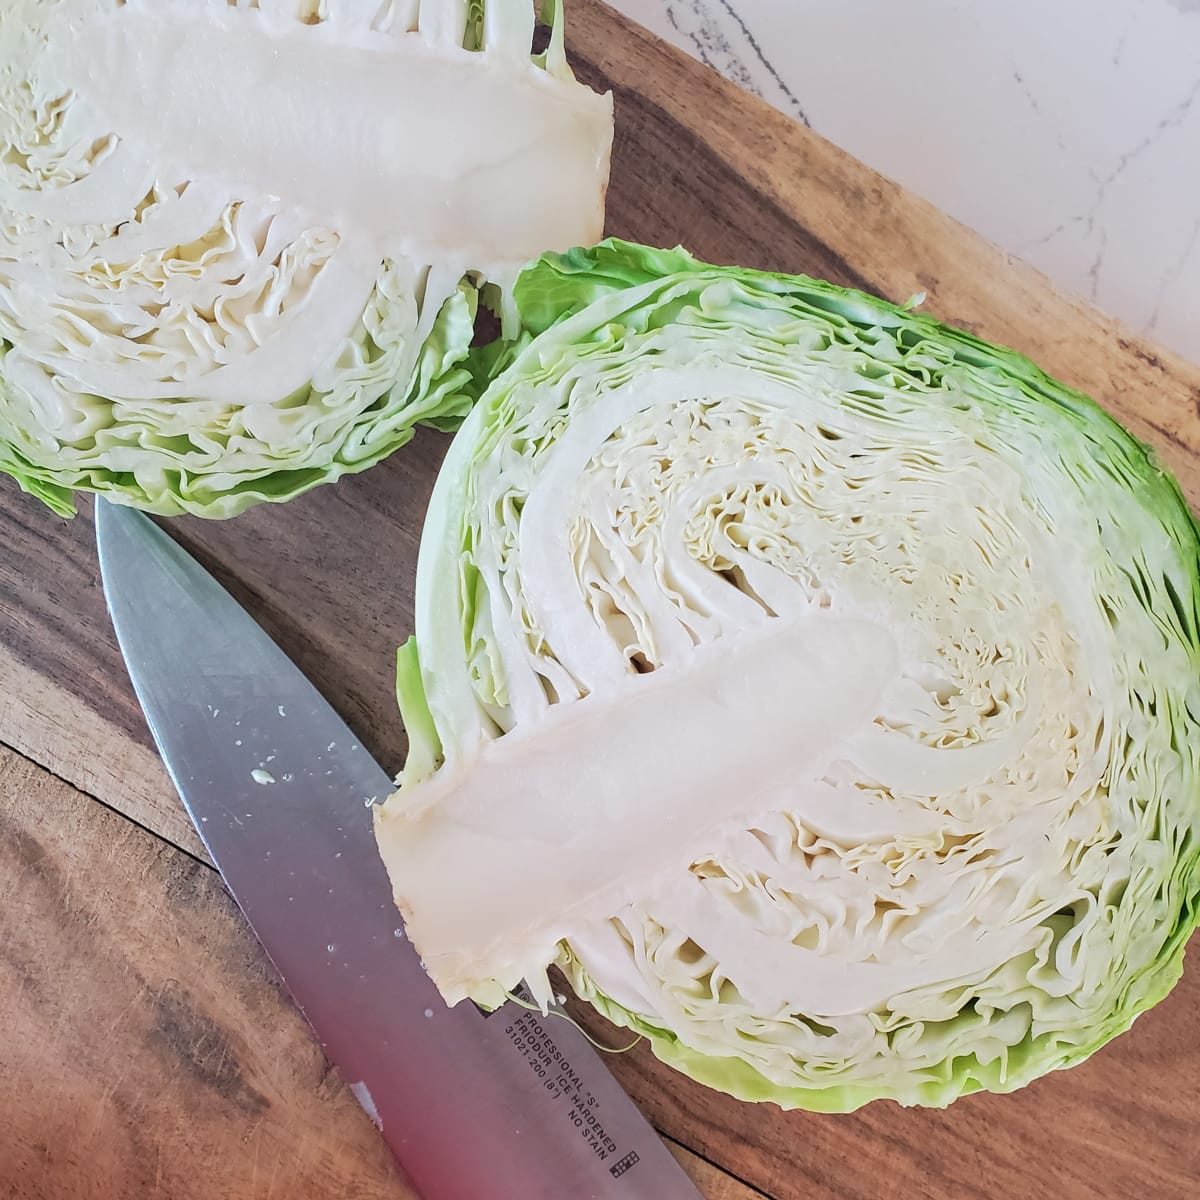 Head of green cabbage cut in half.